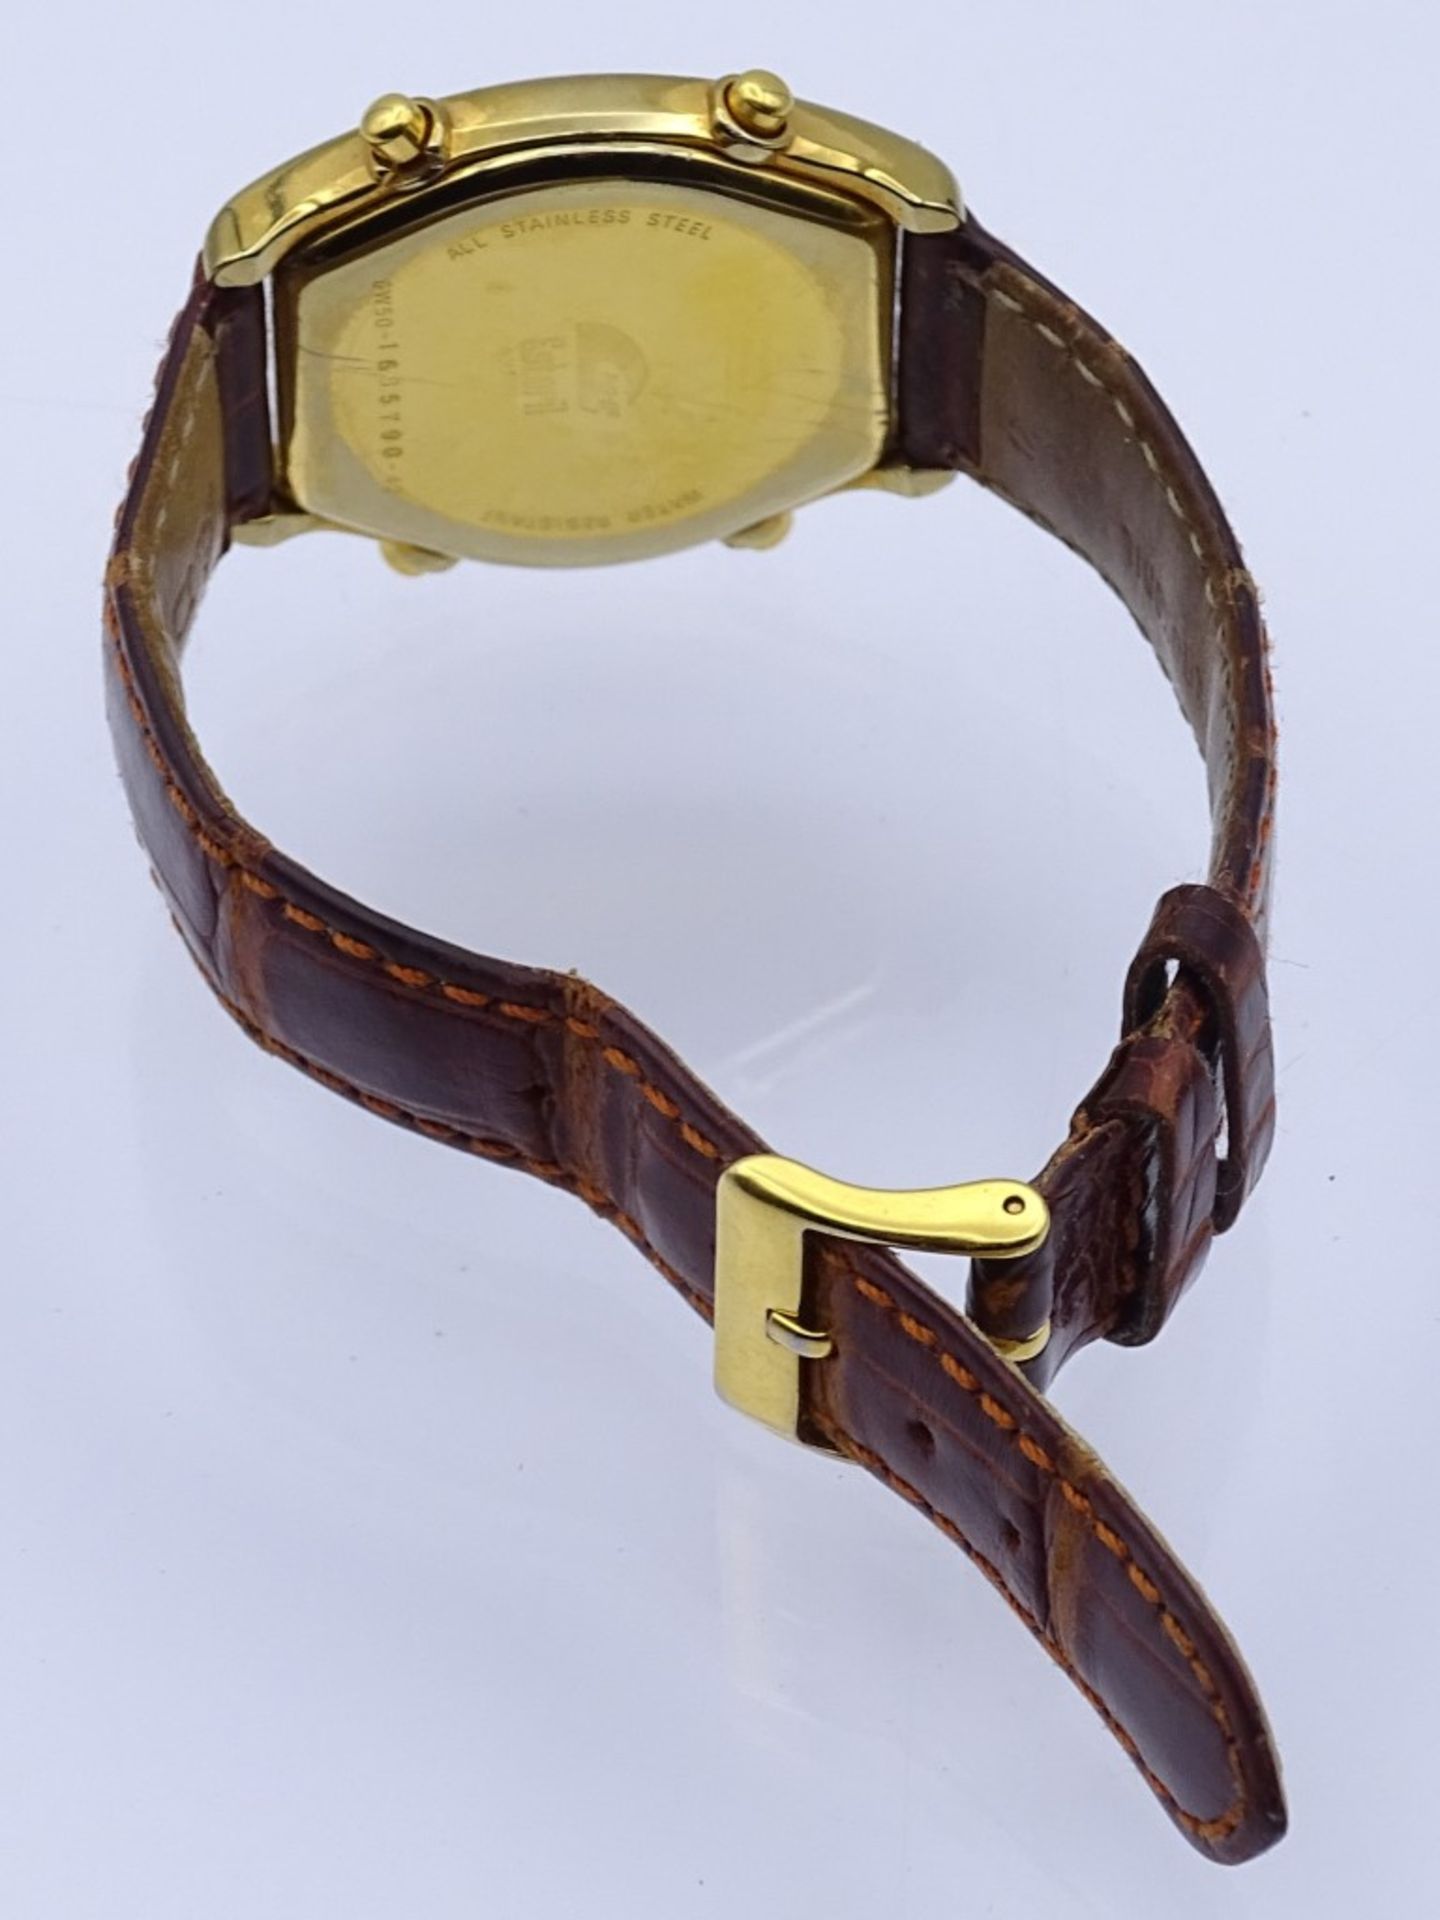 HAU "Dugena-Estoril",Quartz,vergoldet,braunes Krokolederband, Gehäuse 31,5x30,5mm, Funktion nicht - Bild 4 aus 5